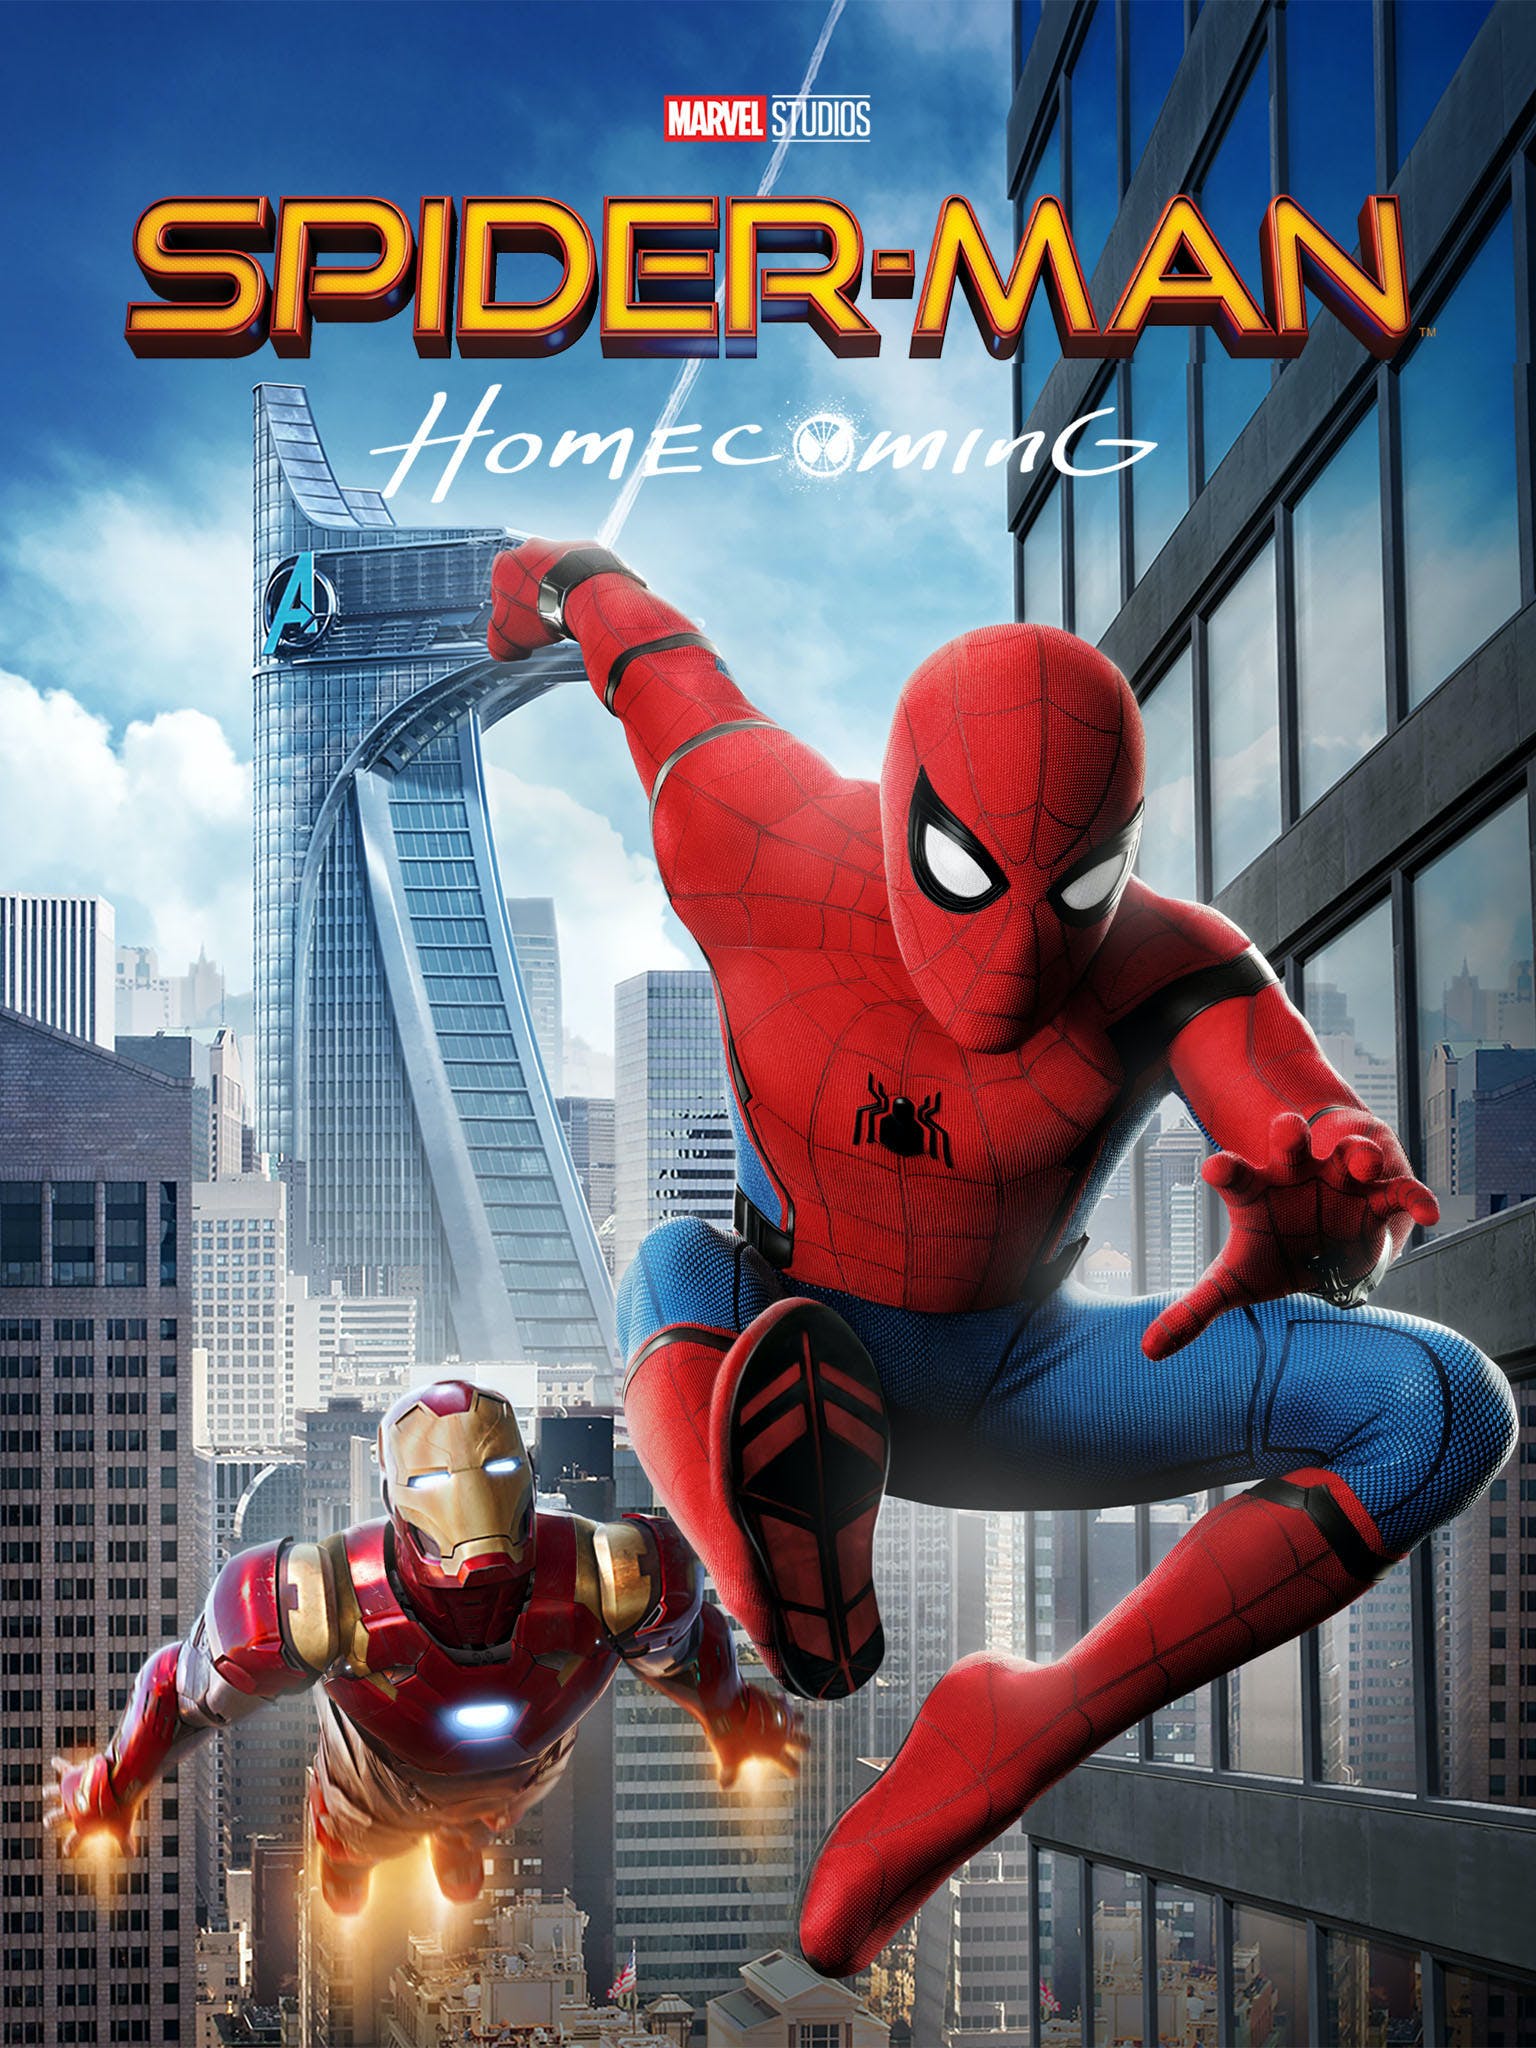 Spider-Man [Vídeo-DVD] : Homecoming - Universitat Politécnica de València